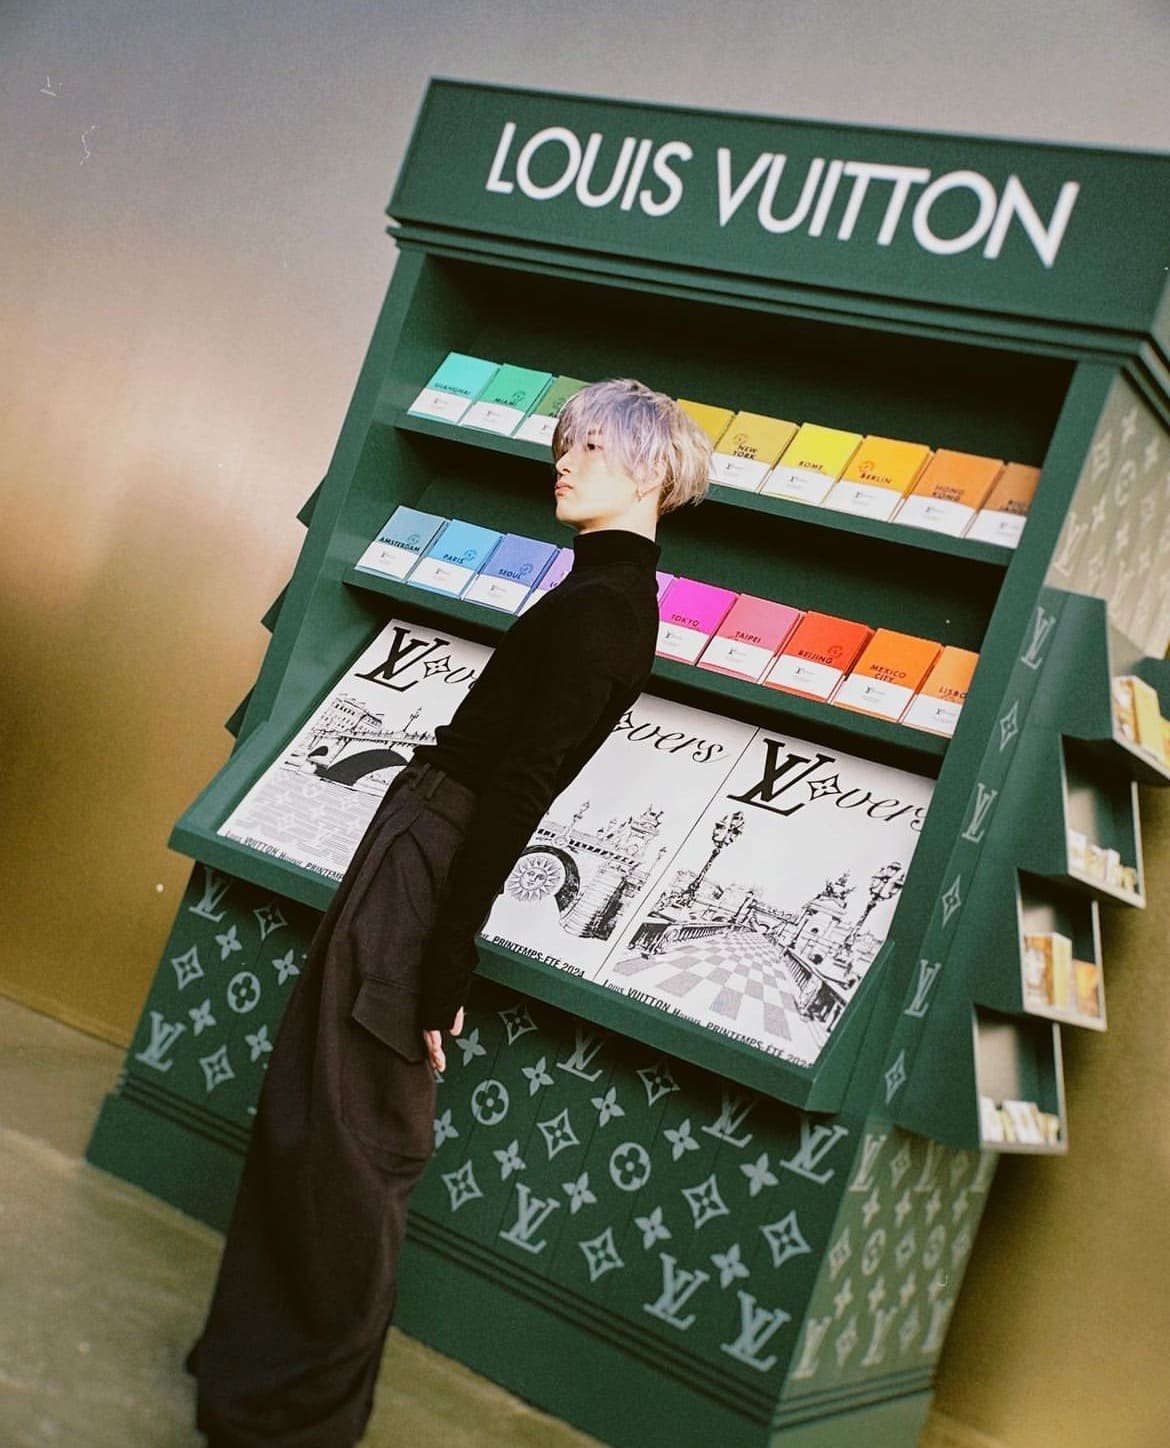 Louis Vuitton names Jackson Wang as latest house ambassador